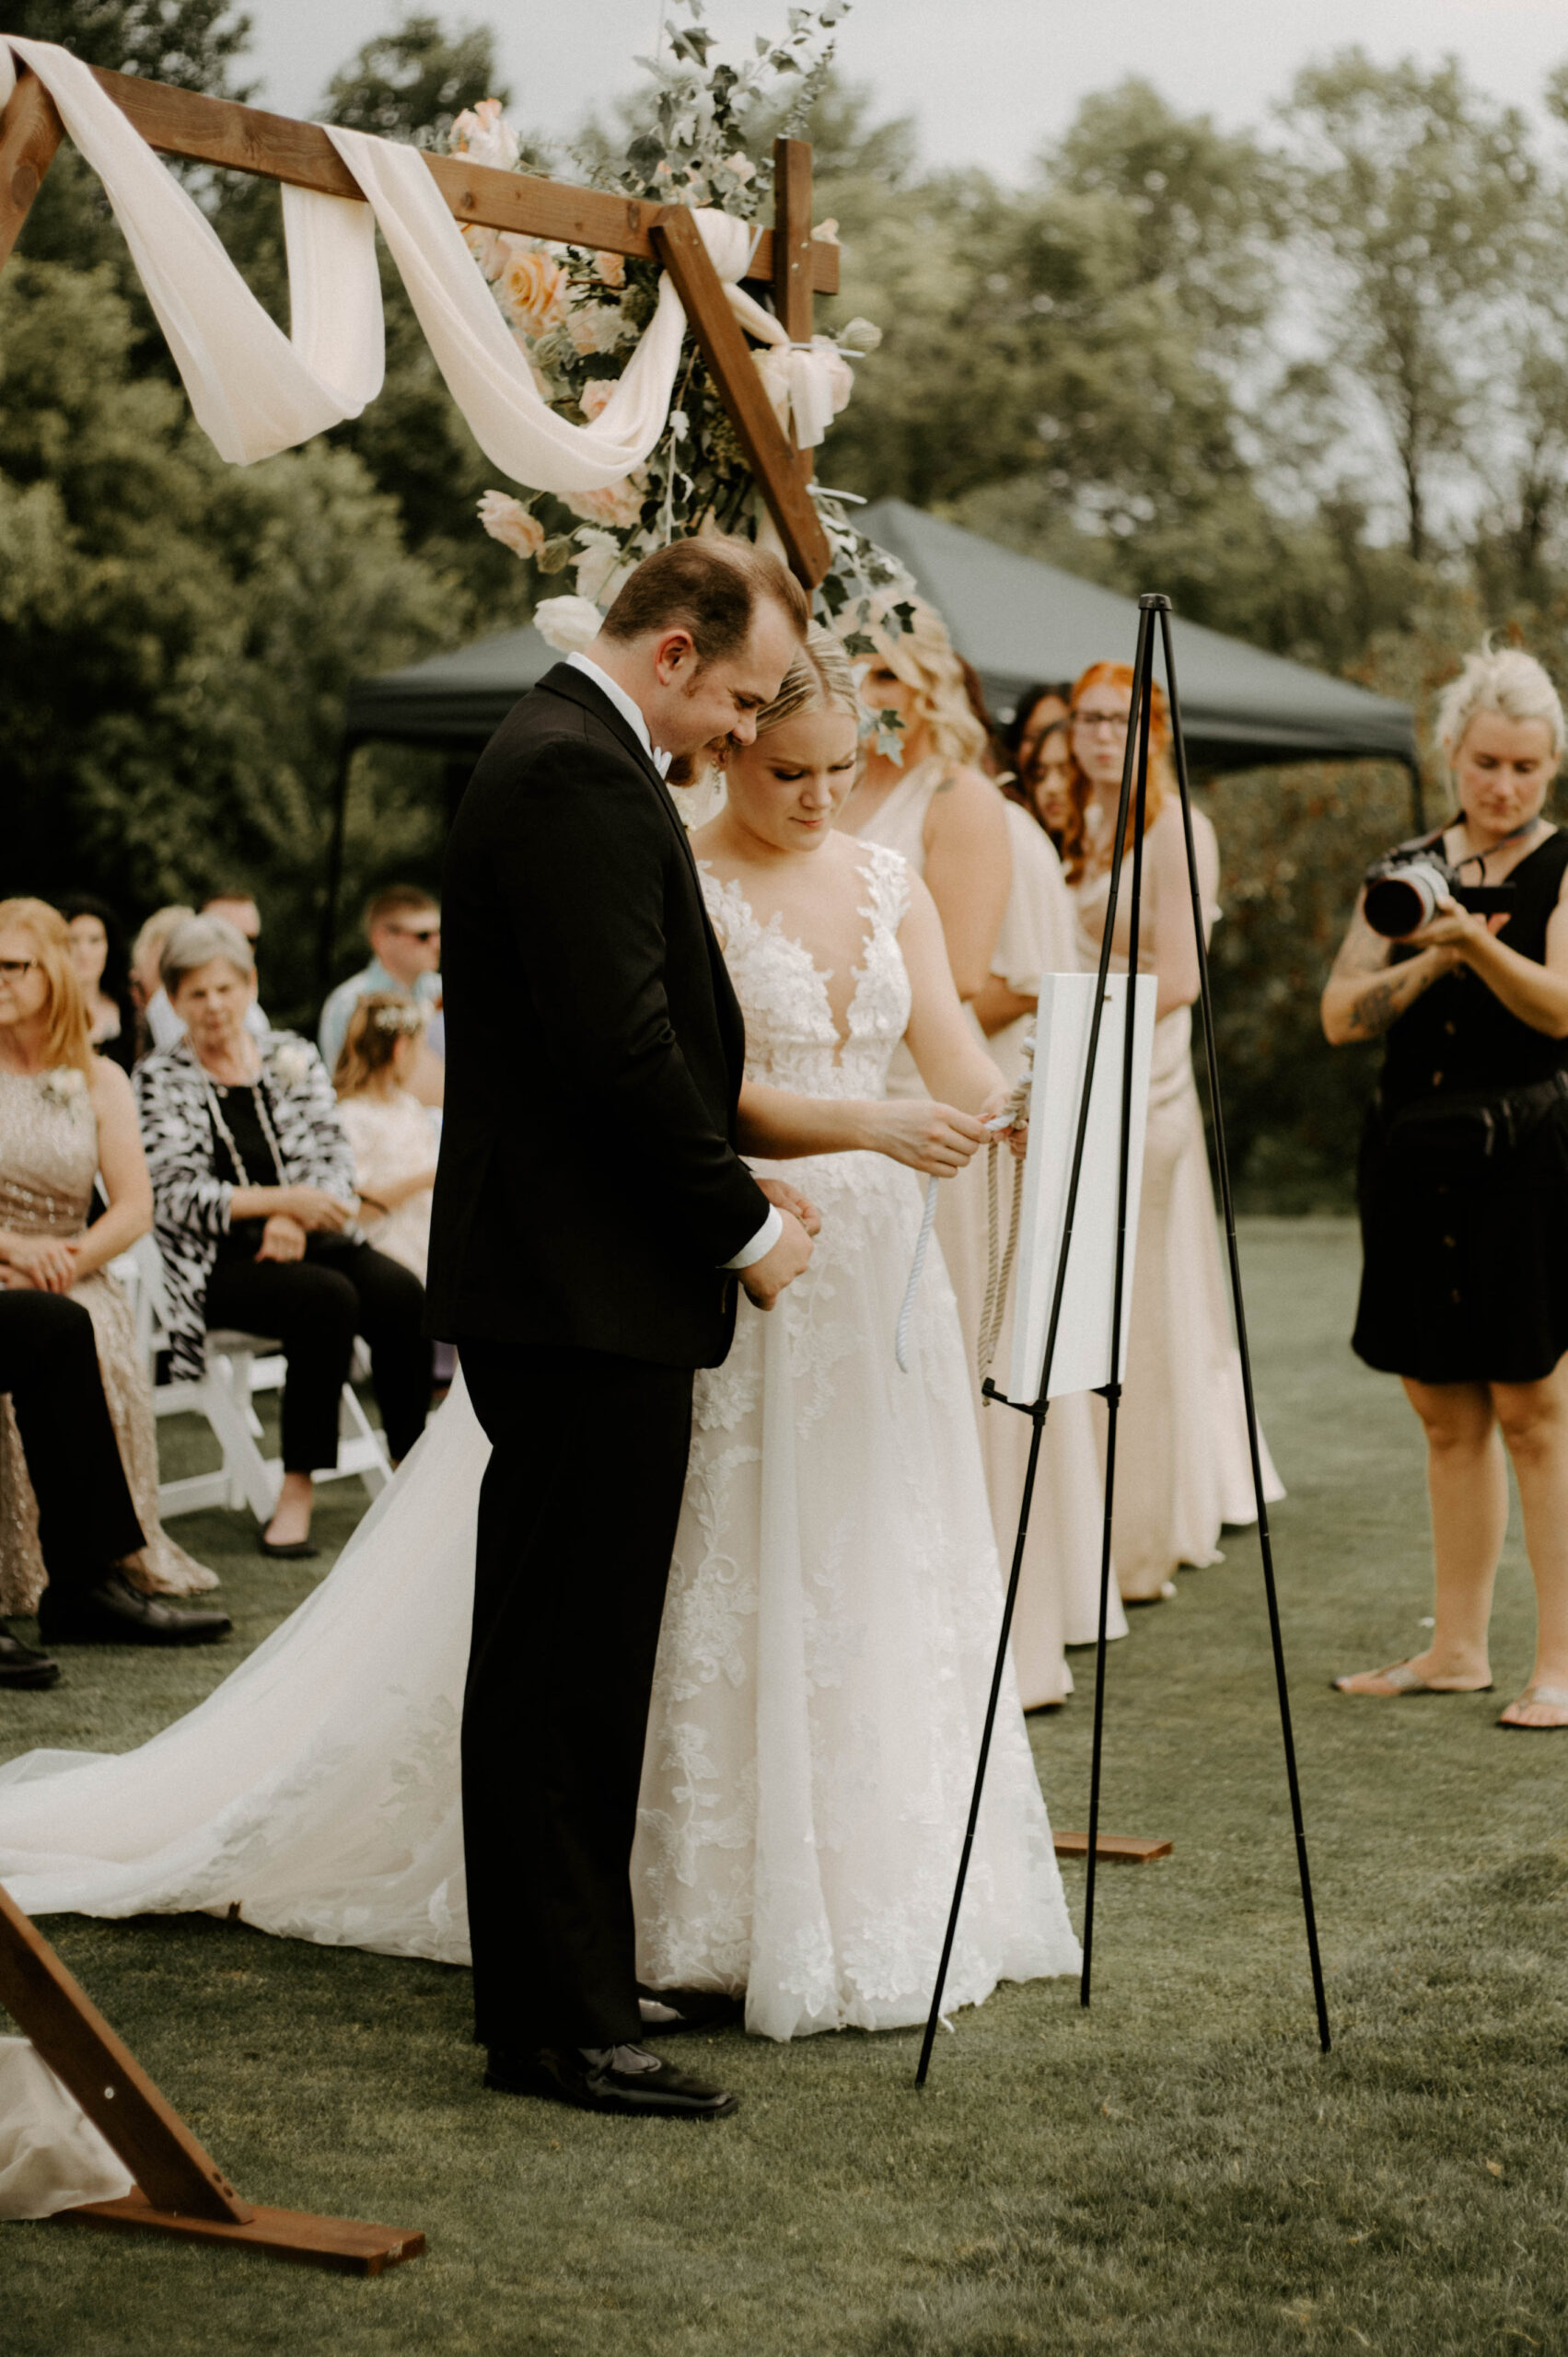 tying the knot wedding ceremony